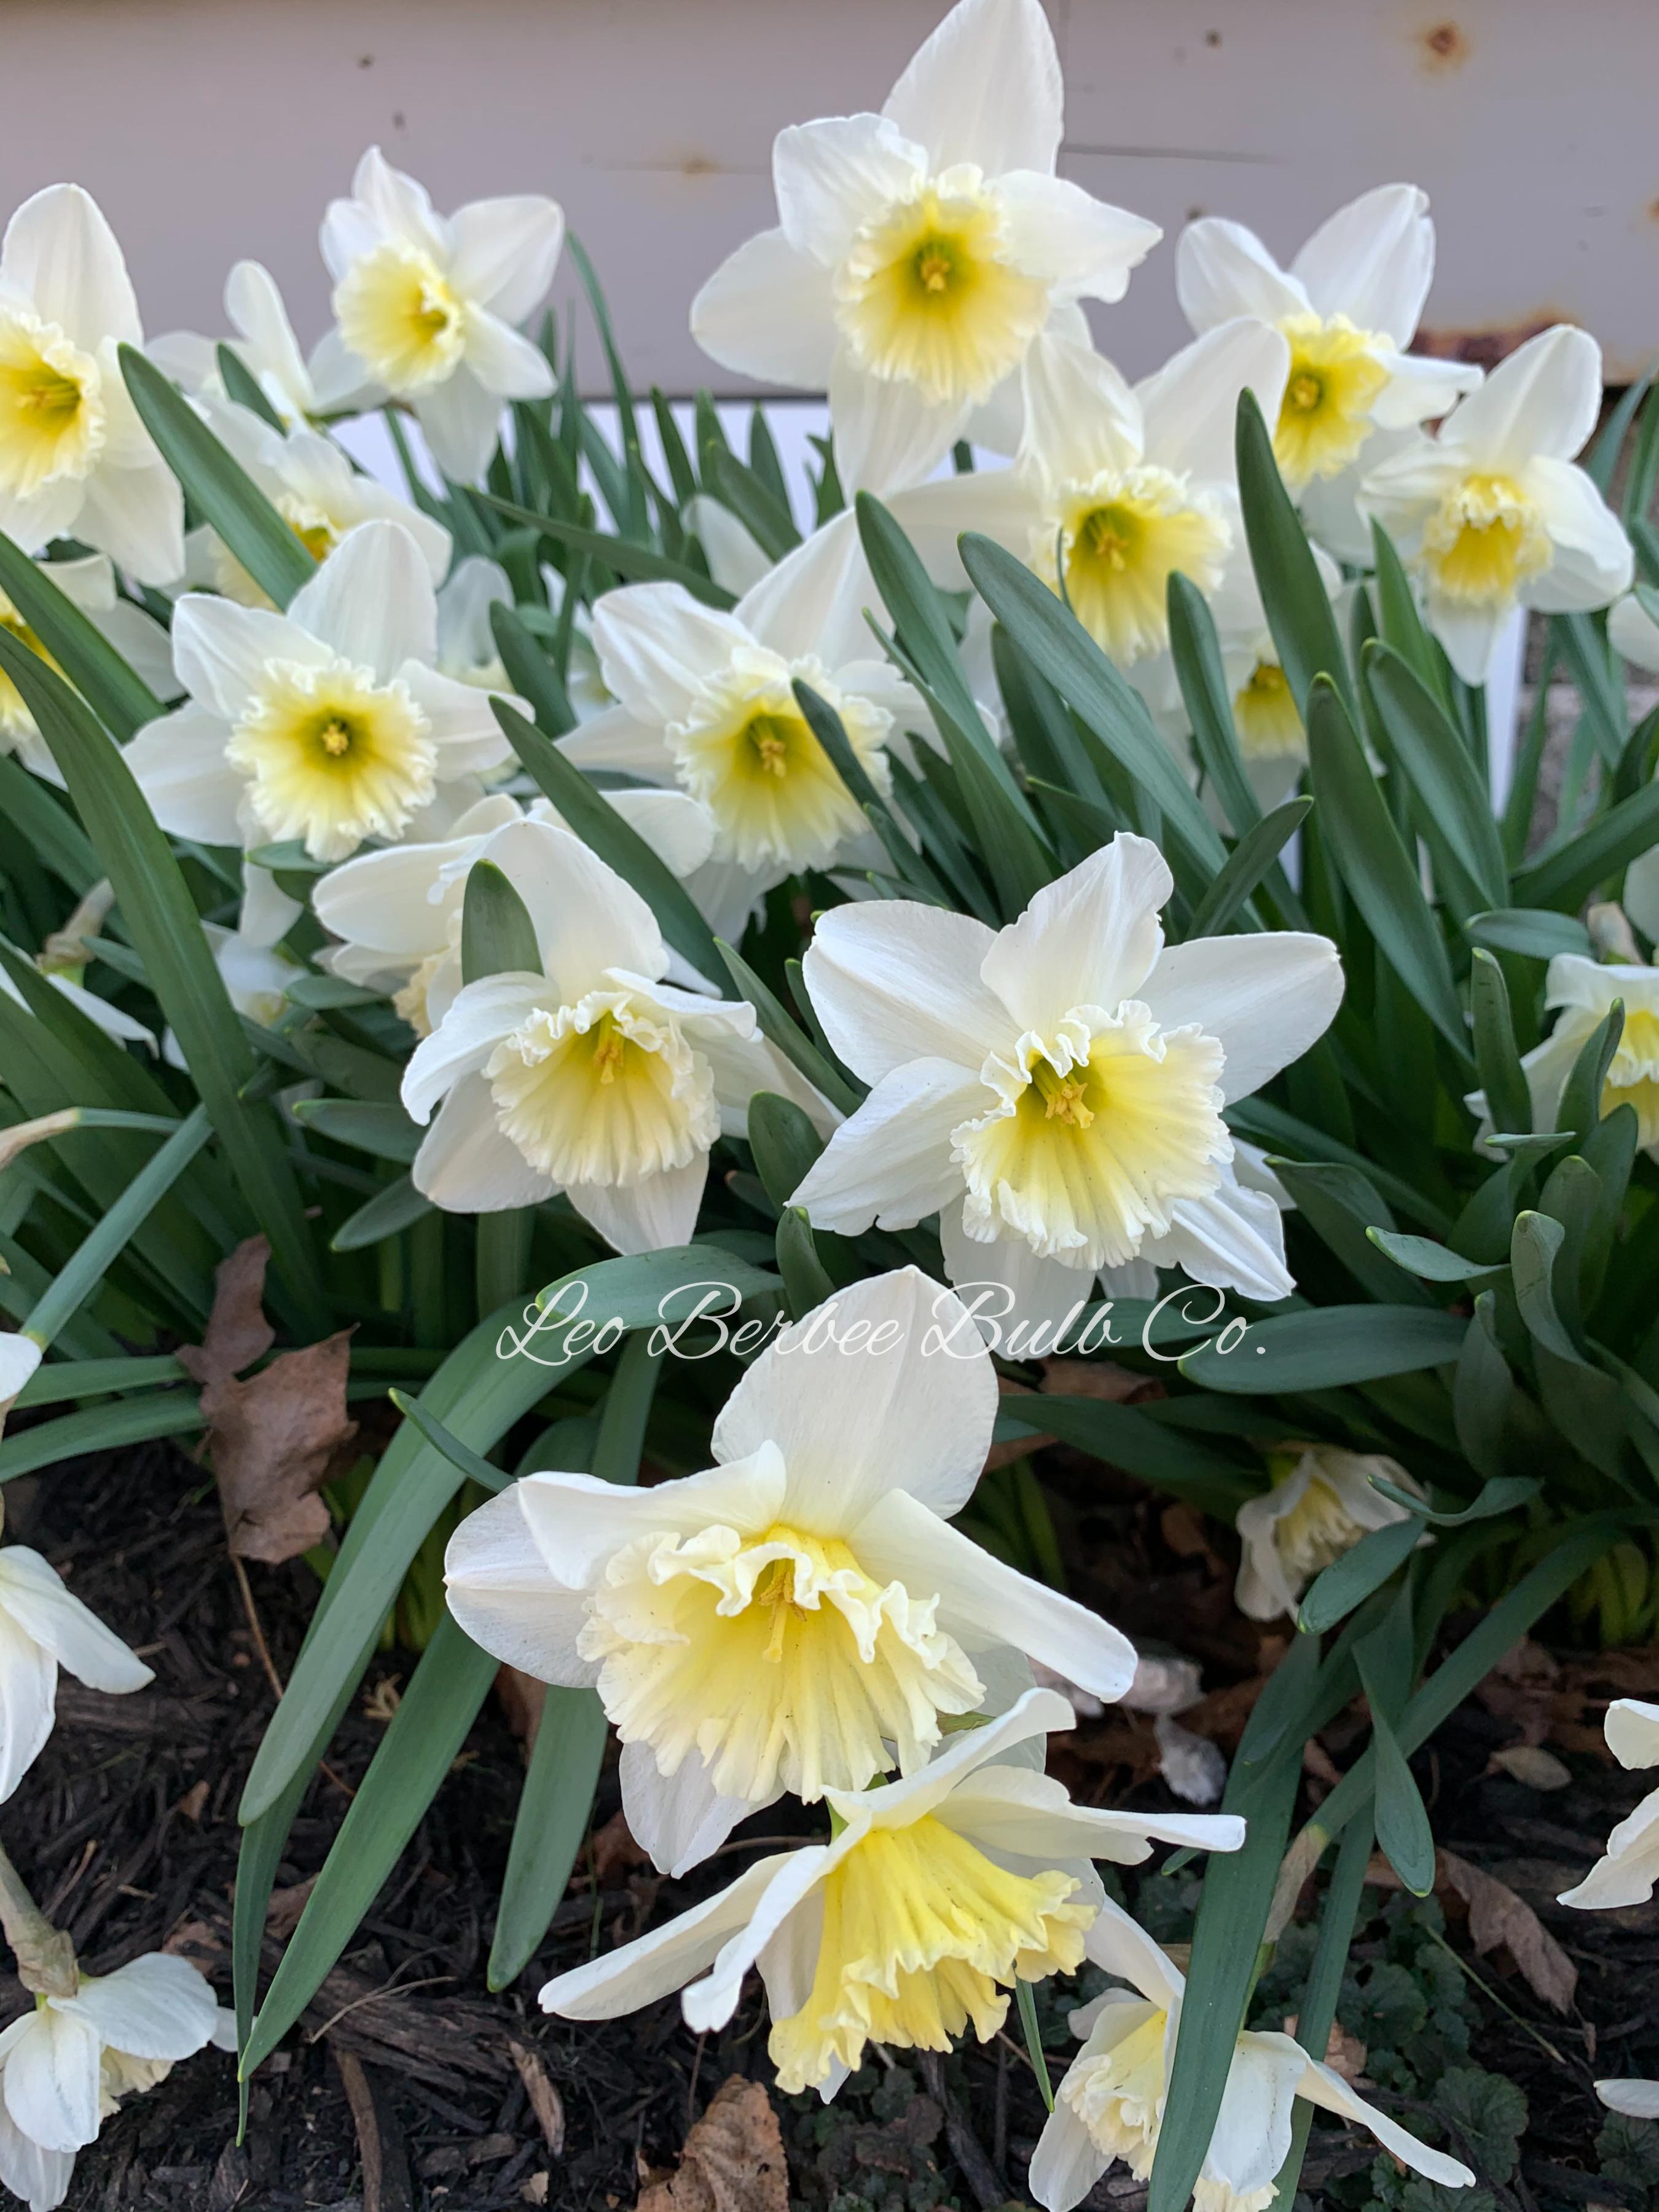 Daffodil Large Cupped Ice Follies from Leo Berbee Bulb Company